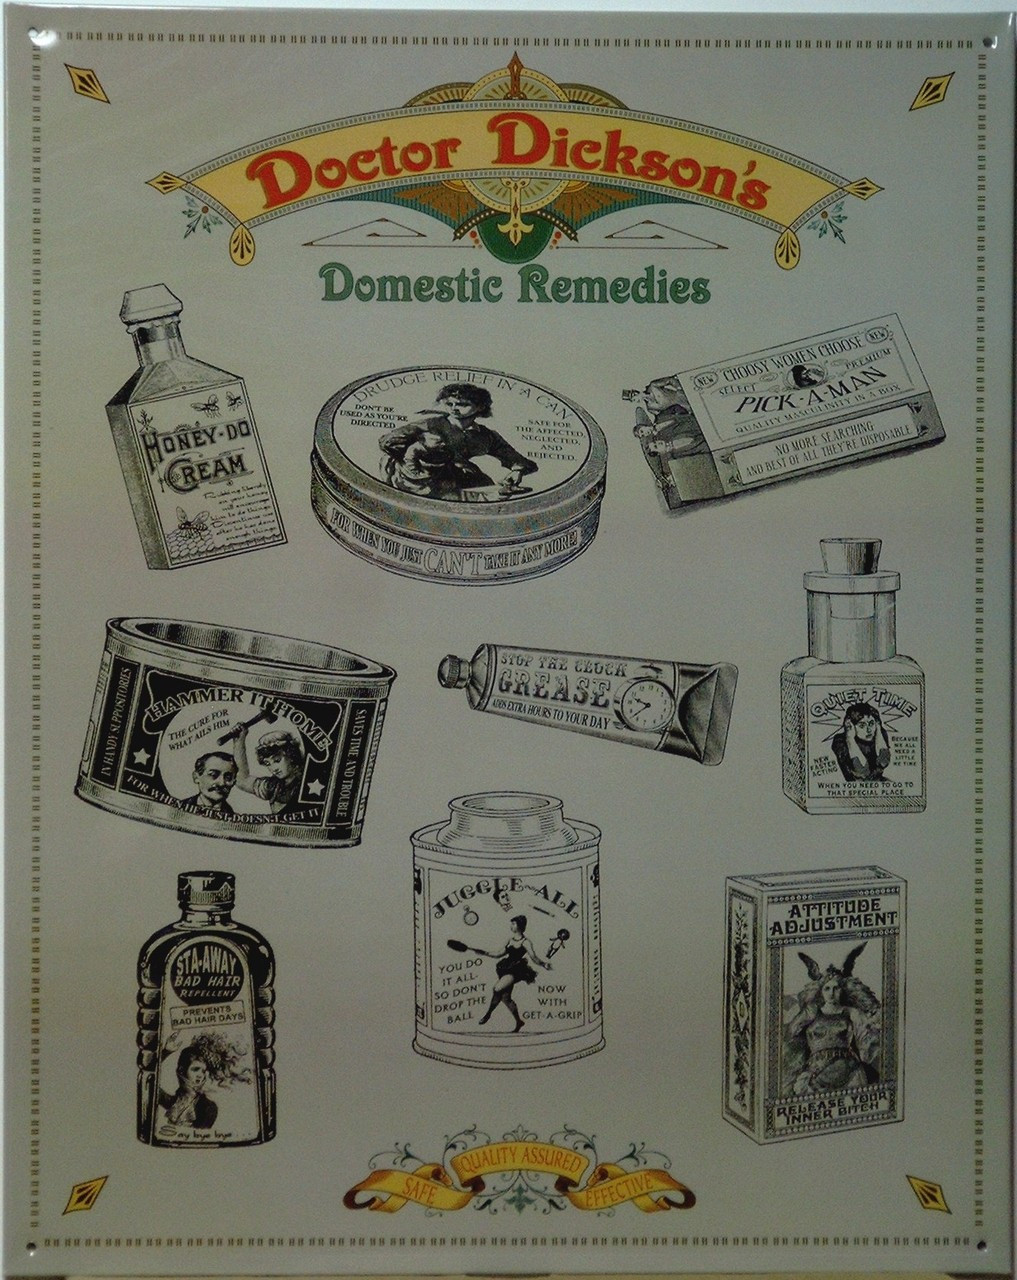 New Nostalgic Dr Dickenson's Domestic Remedies Ad Tin Sign Vintage Doctor Decor 